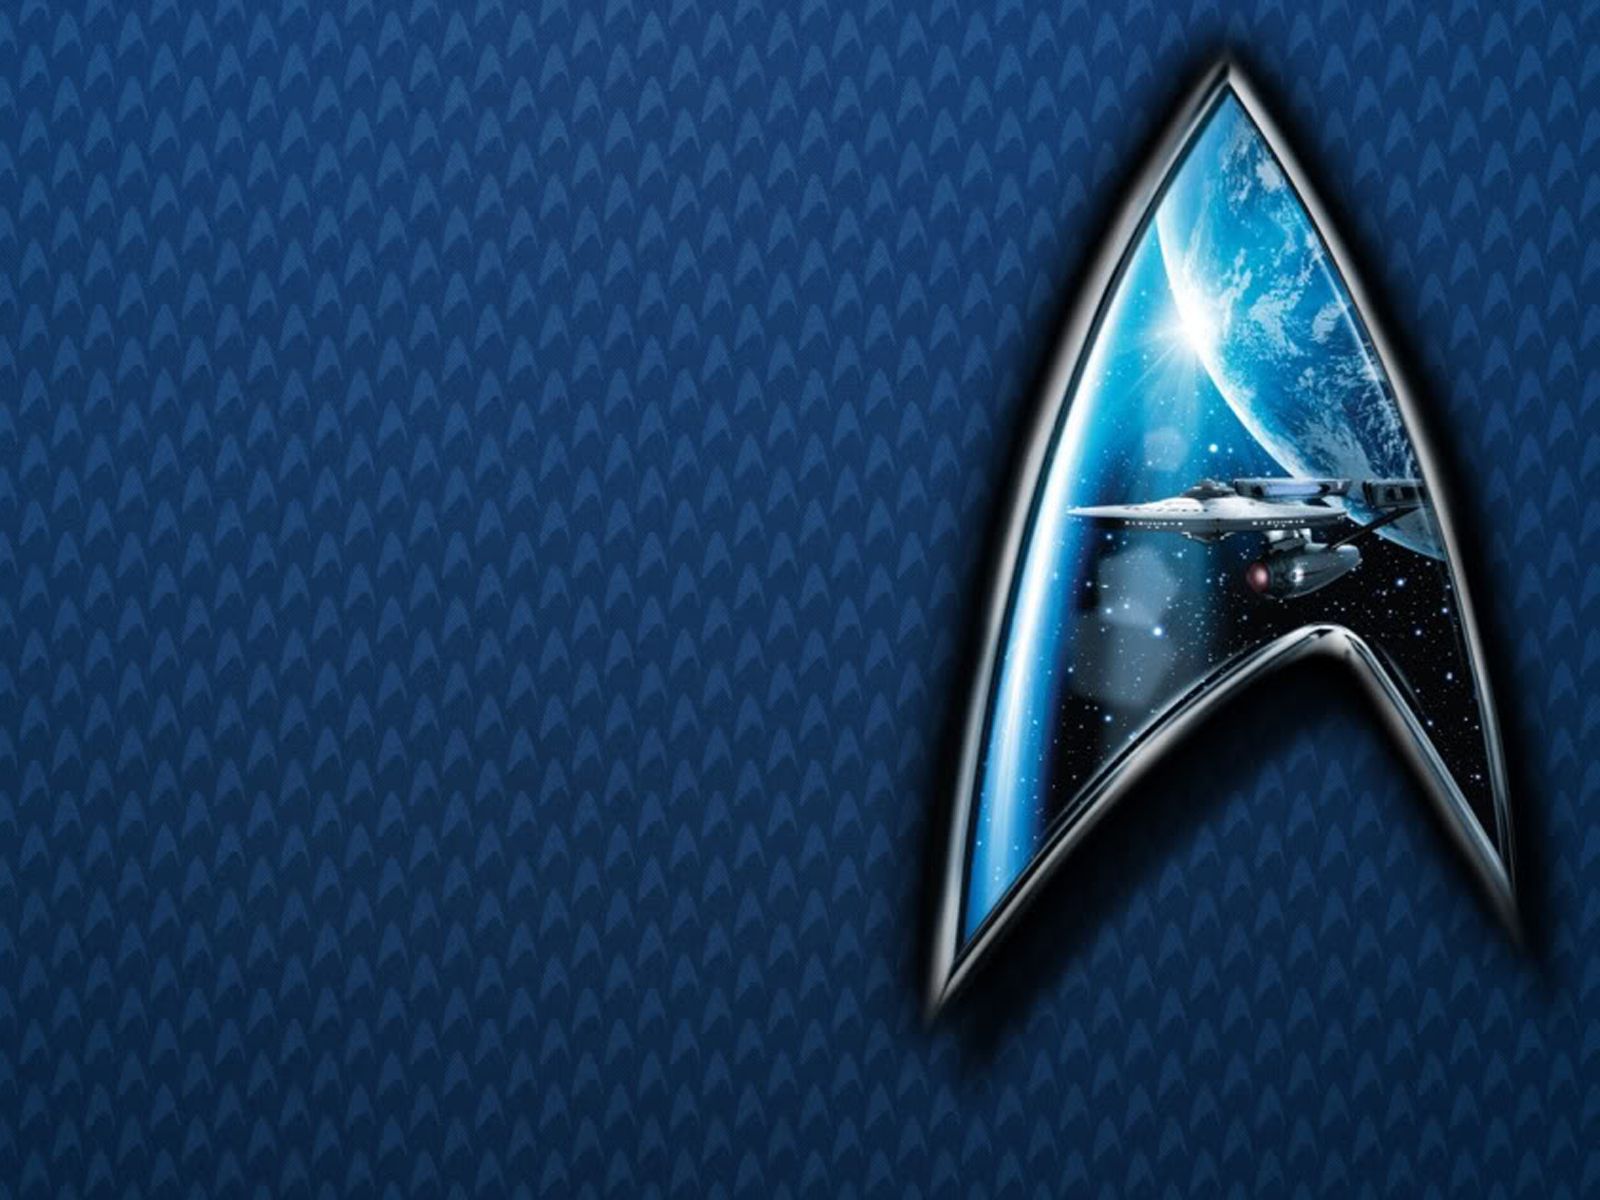 Star Trek USS Enterprise Insignia, free Star Trek computer desktop wallpaper. Star trek wallpaper, Star trek image, Star trek